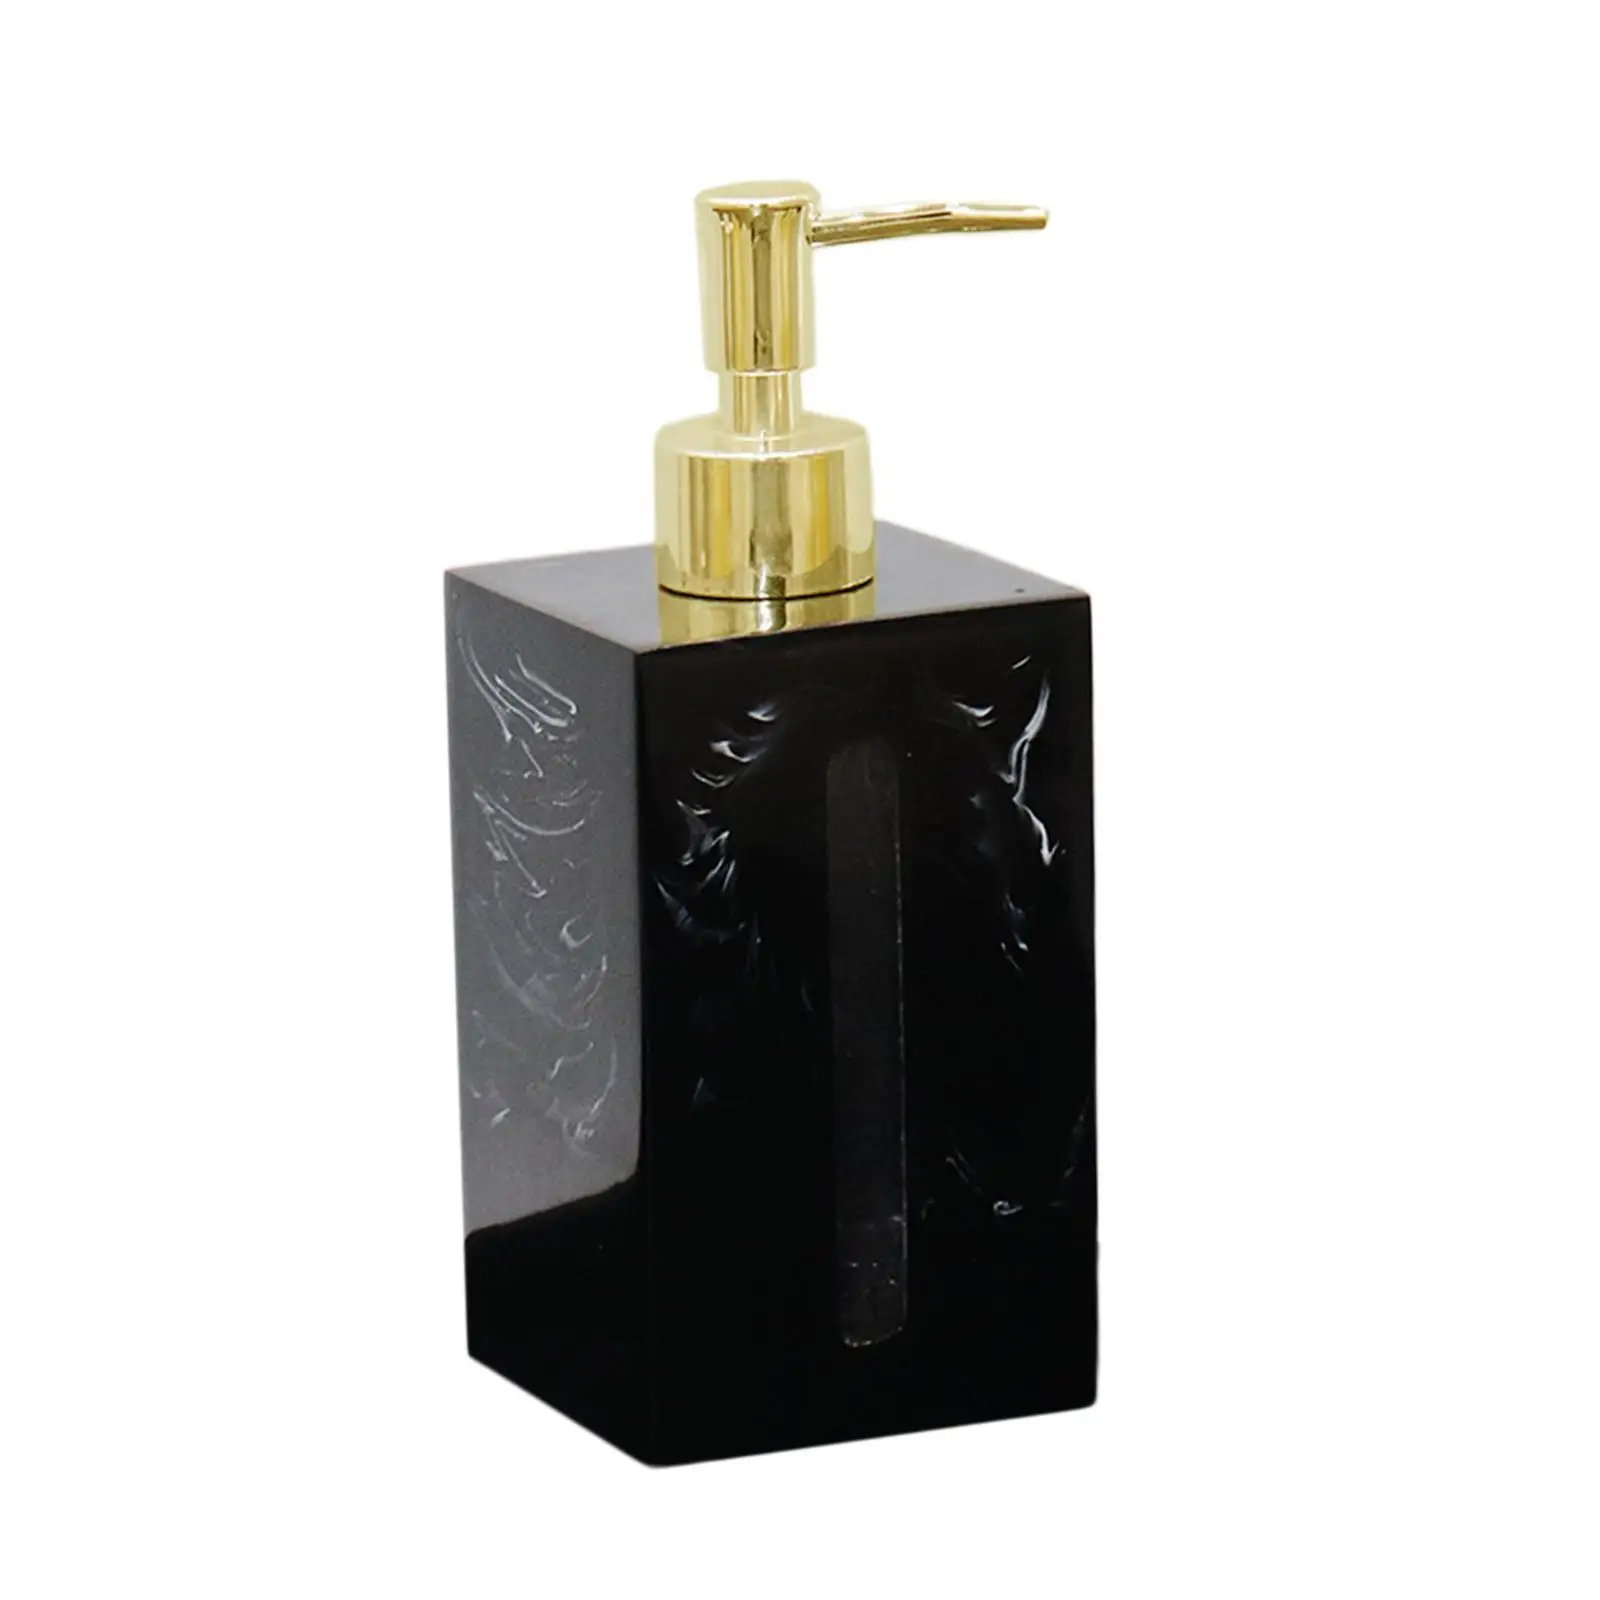 Resin Liquid Soap Dispenser Marble Style with Rustproof Pump Soap Dispenser Liquid Bottle for Home Bathroom Kitchen Lotion